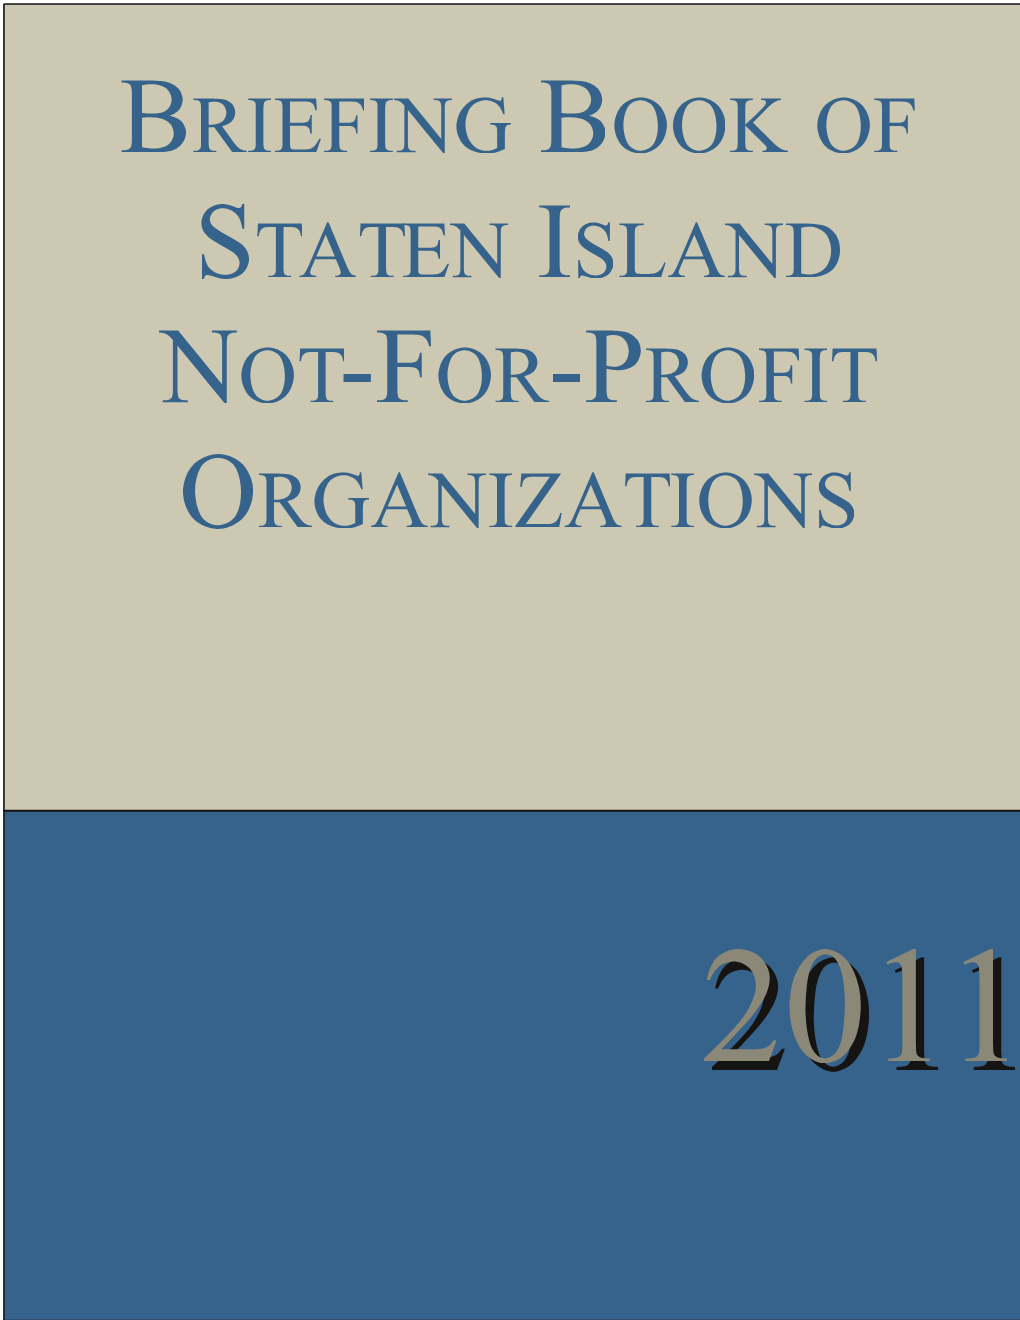 Staten Island NFP Association 2011 Briefing Book